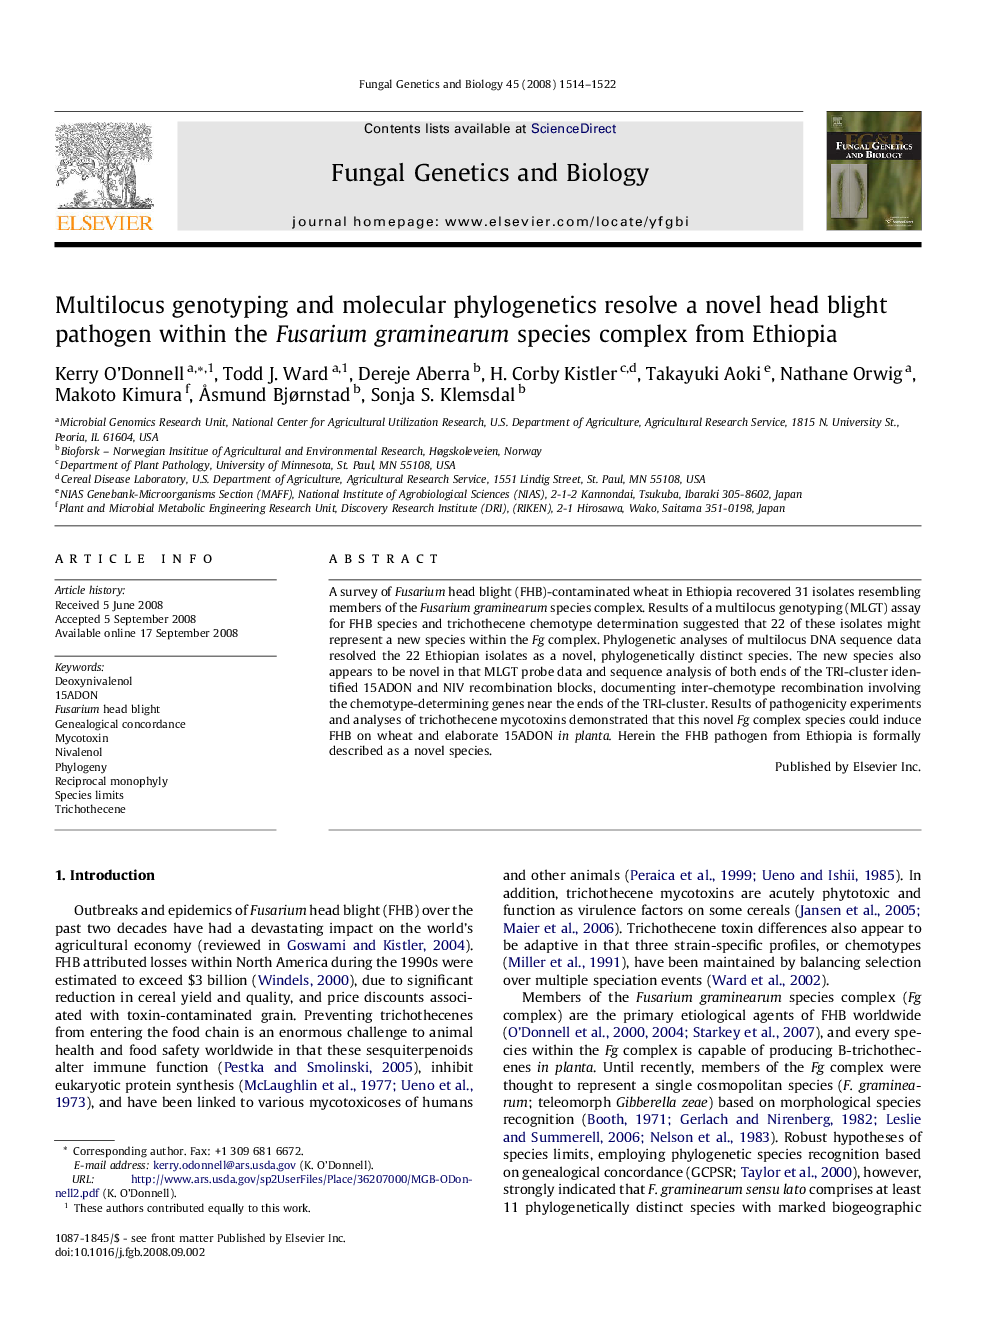 Multilocus genotyping and molecular phylogenetics resolve a novel head blight pathogen within the Fusarium graminearum species complex from Ethiopia